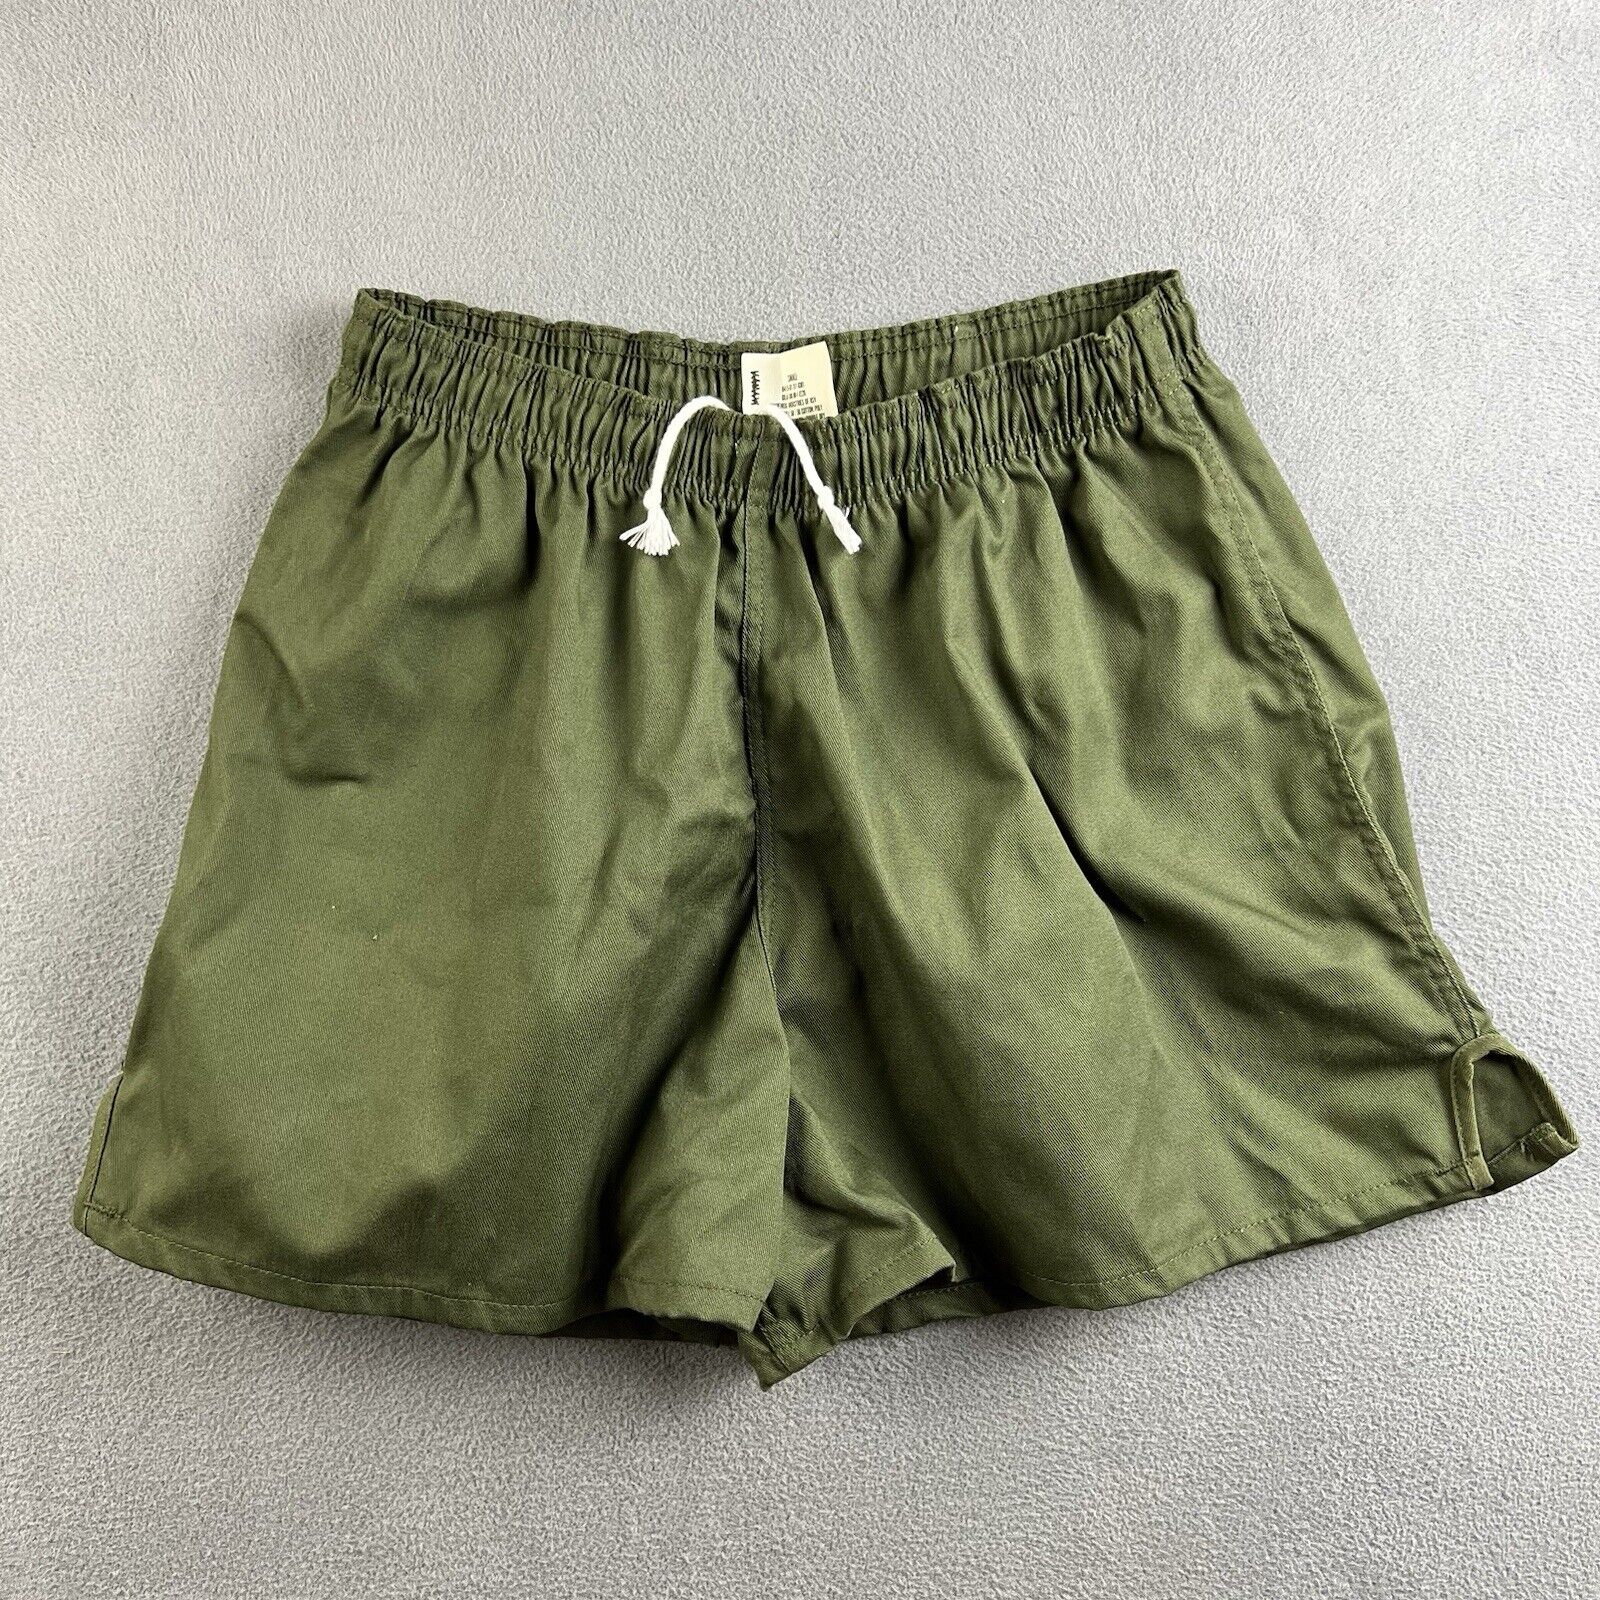 Vintage Army Shorts Mens Small Green Twill Training Duty Uniform PT 3.5” Inseam